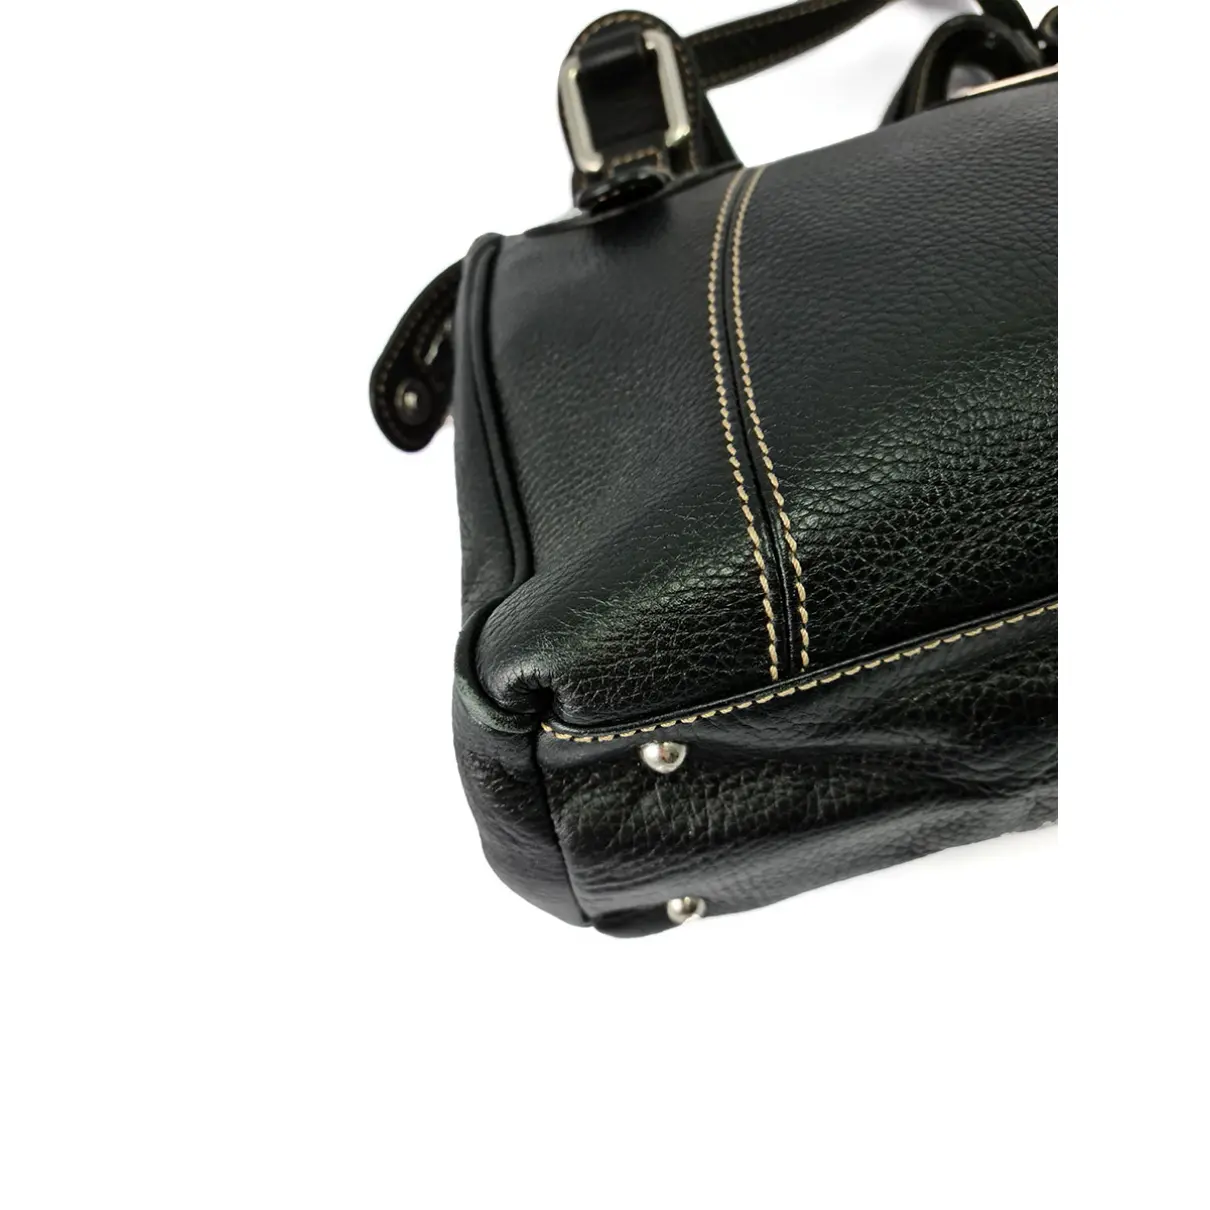 Buy Mollerus Leather handbag online